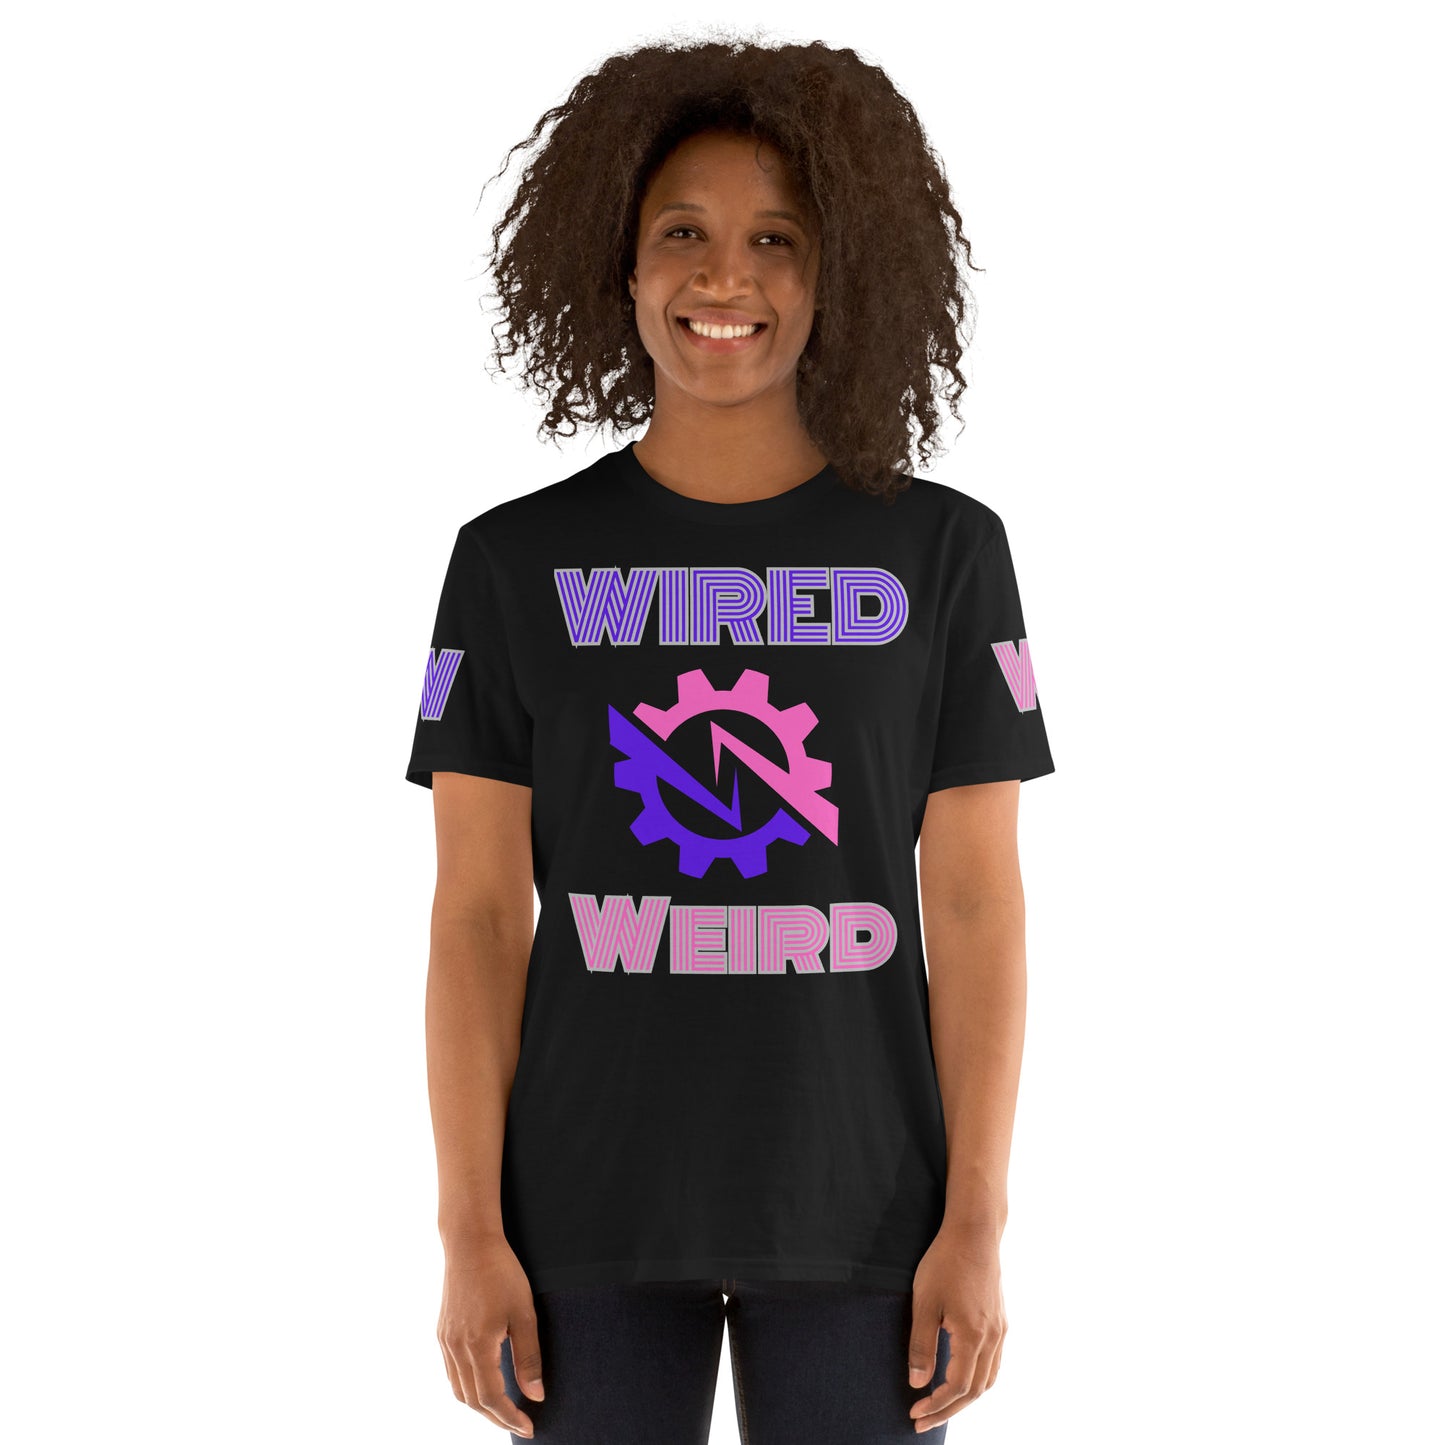 Wired Weird Short-Sleeve Unisex T-Shirt PInk/Purple